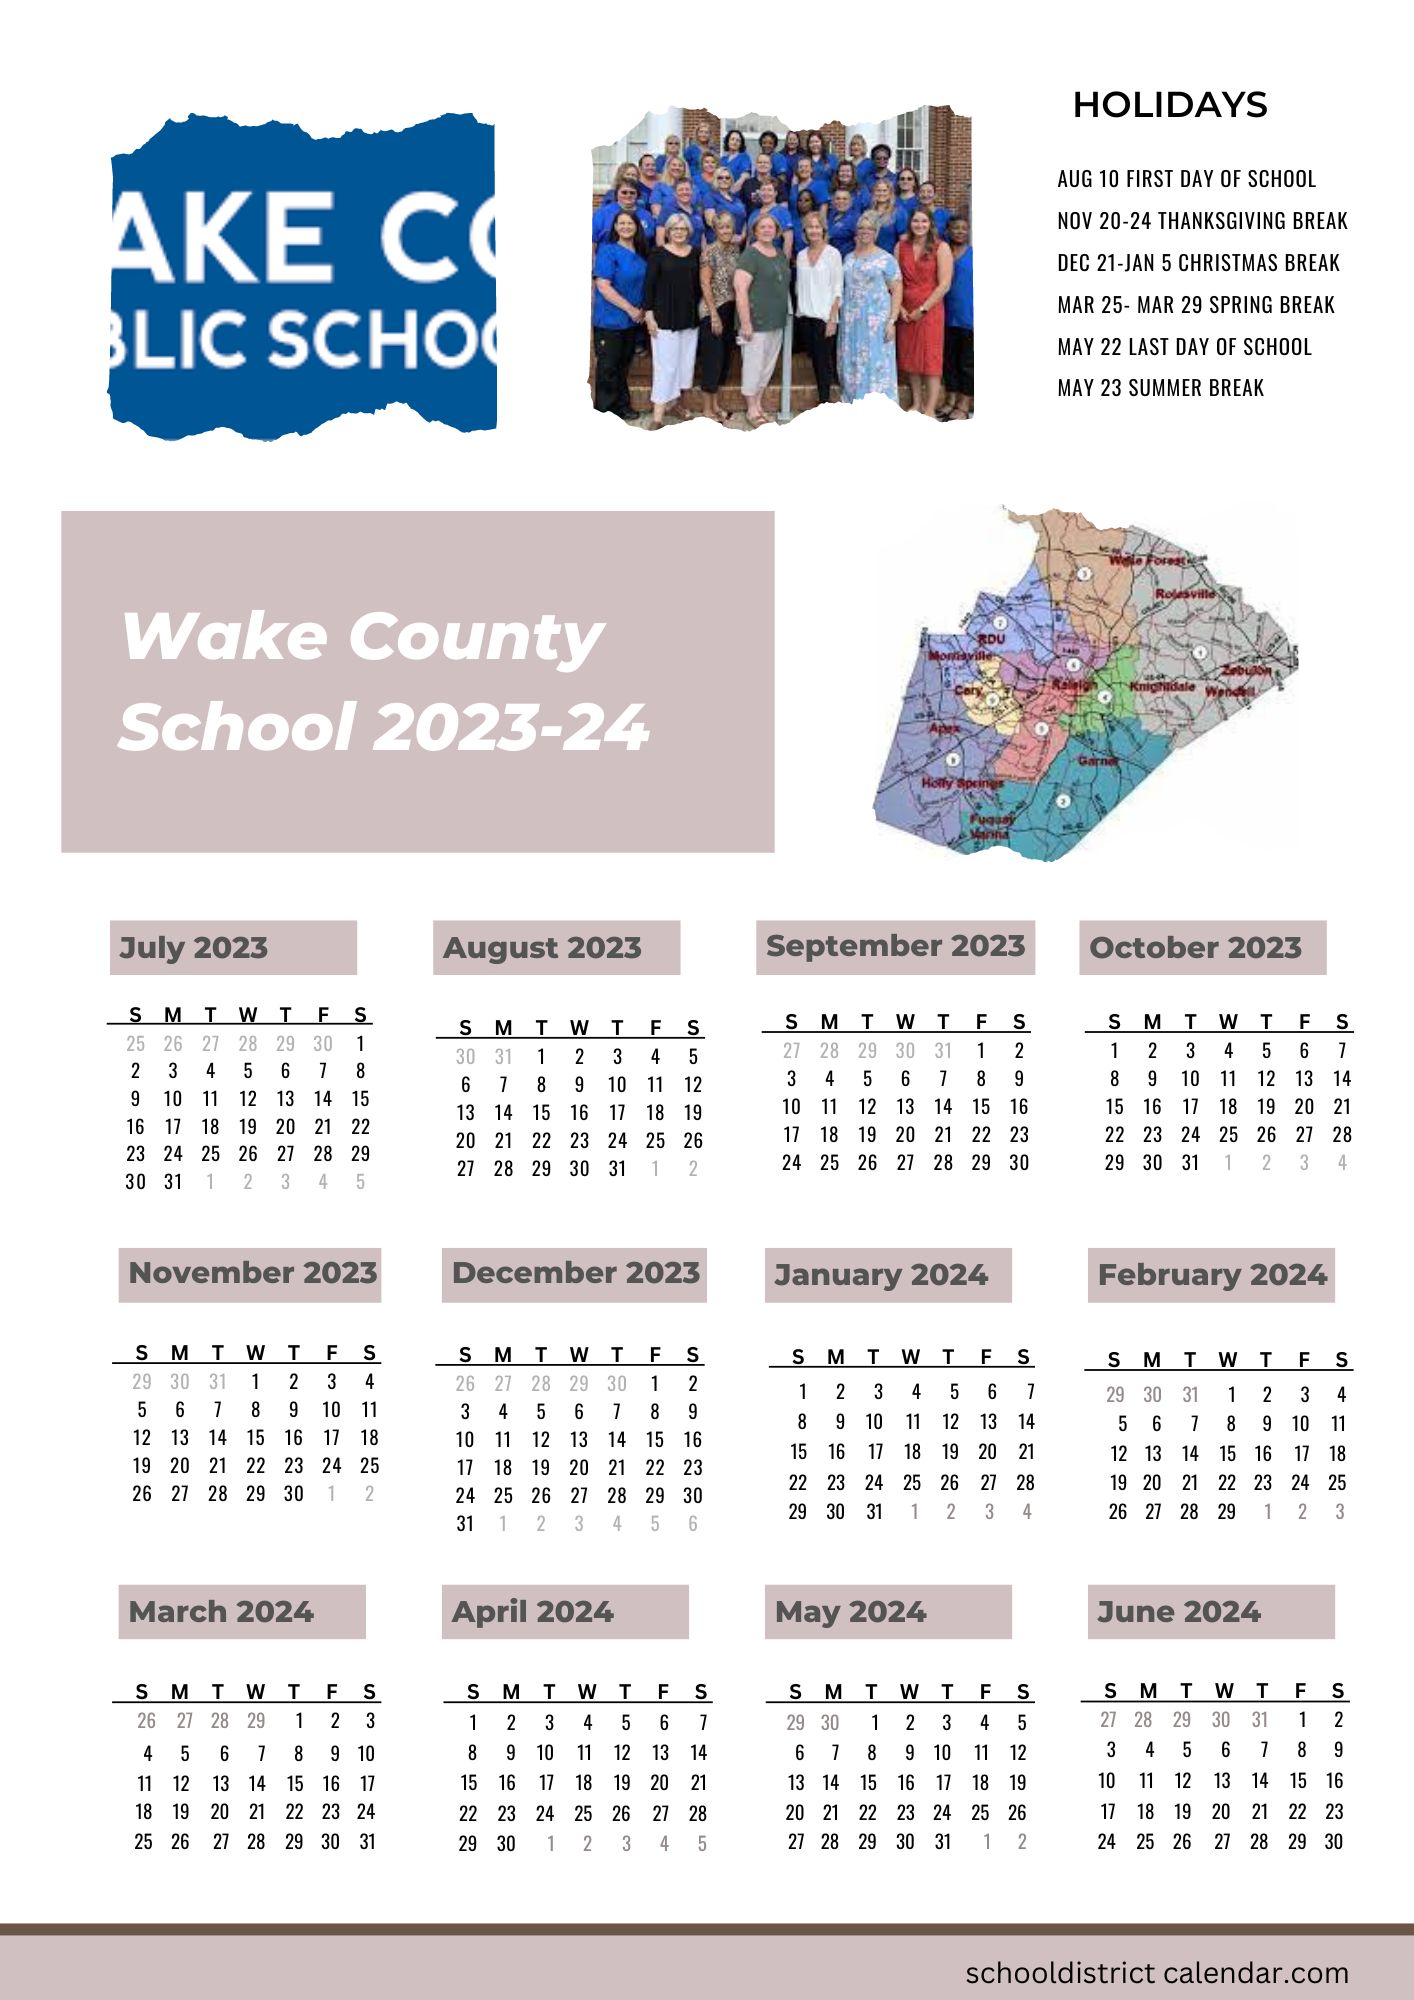 wake-county-schools-calendar-holidays-2023-2024